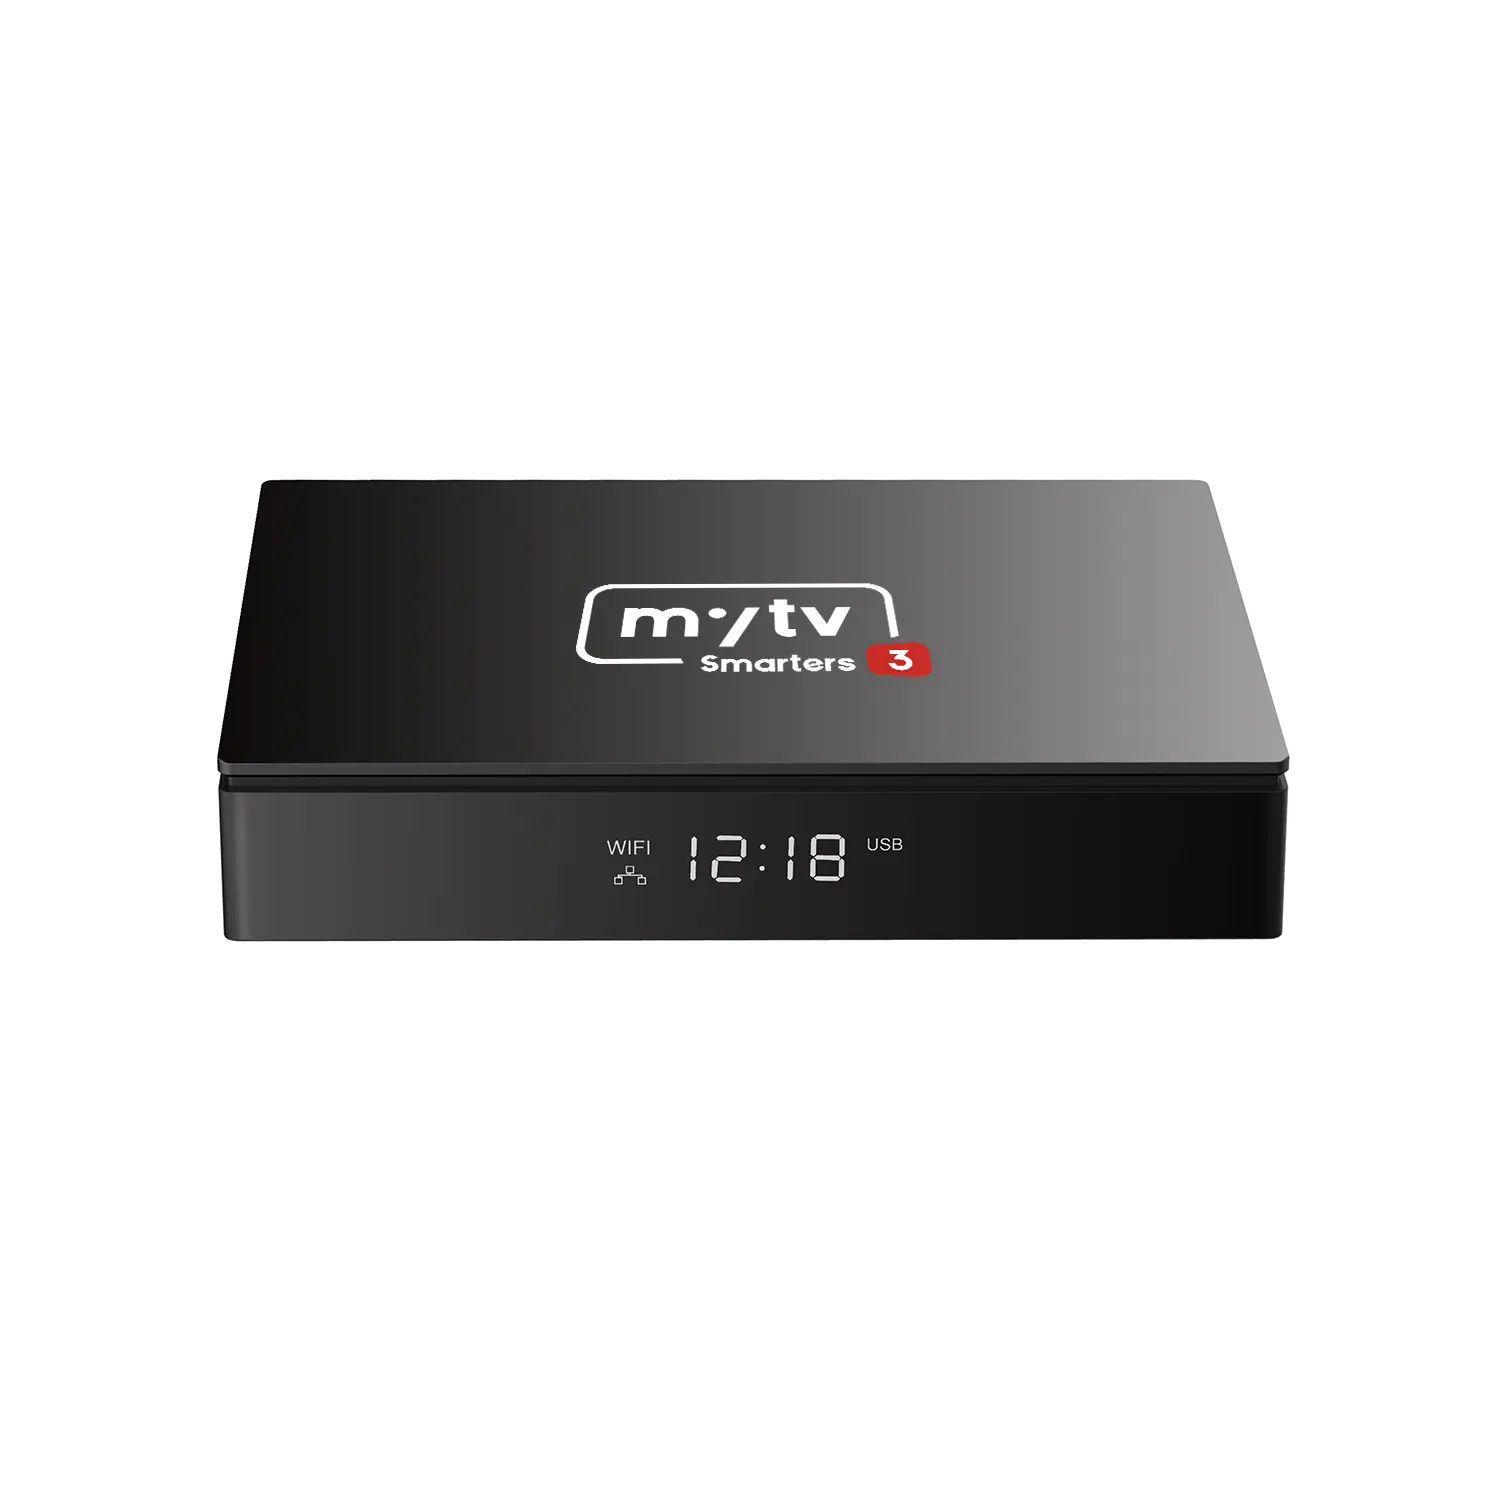 T9 Android TV Box S905W2 4 + 32GB 8K TV versión IPTV middleware MYTV Smarters 3 Player ATV UI BT Voice Remote Smart TV Box